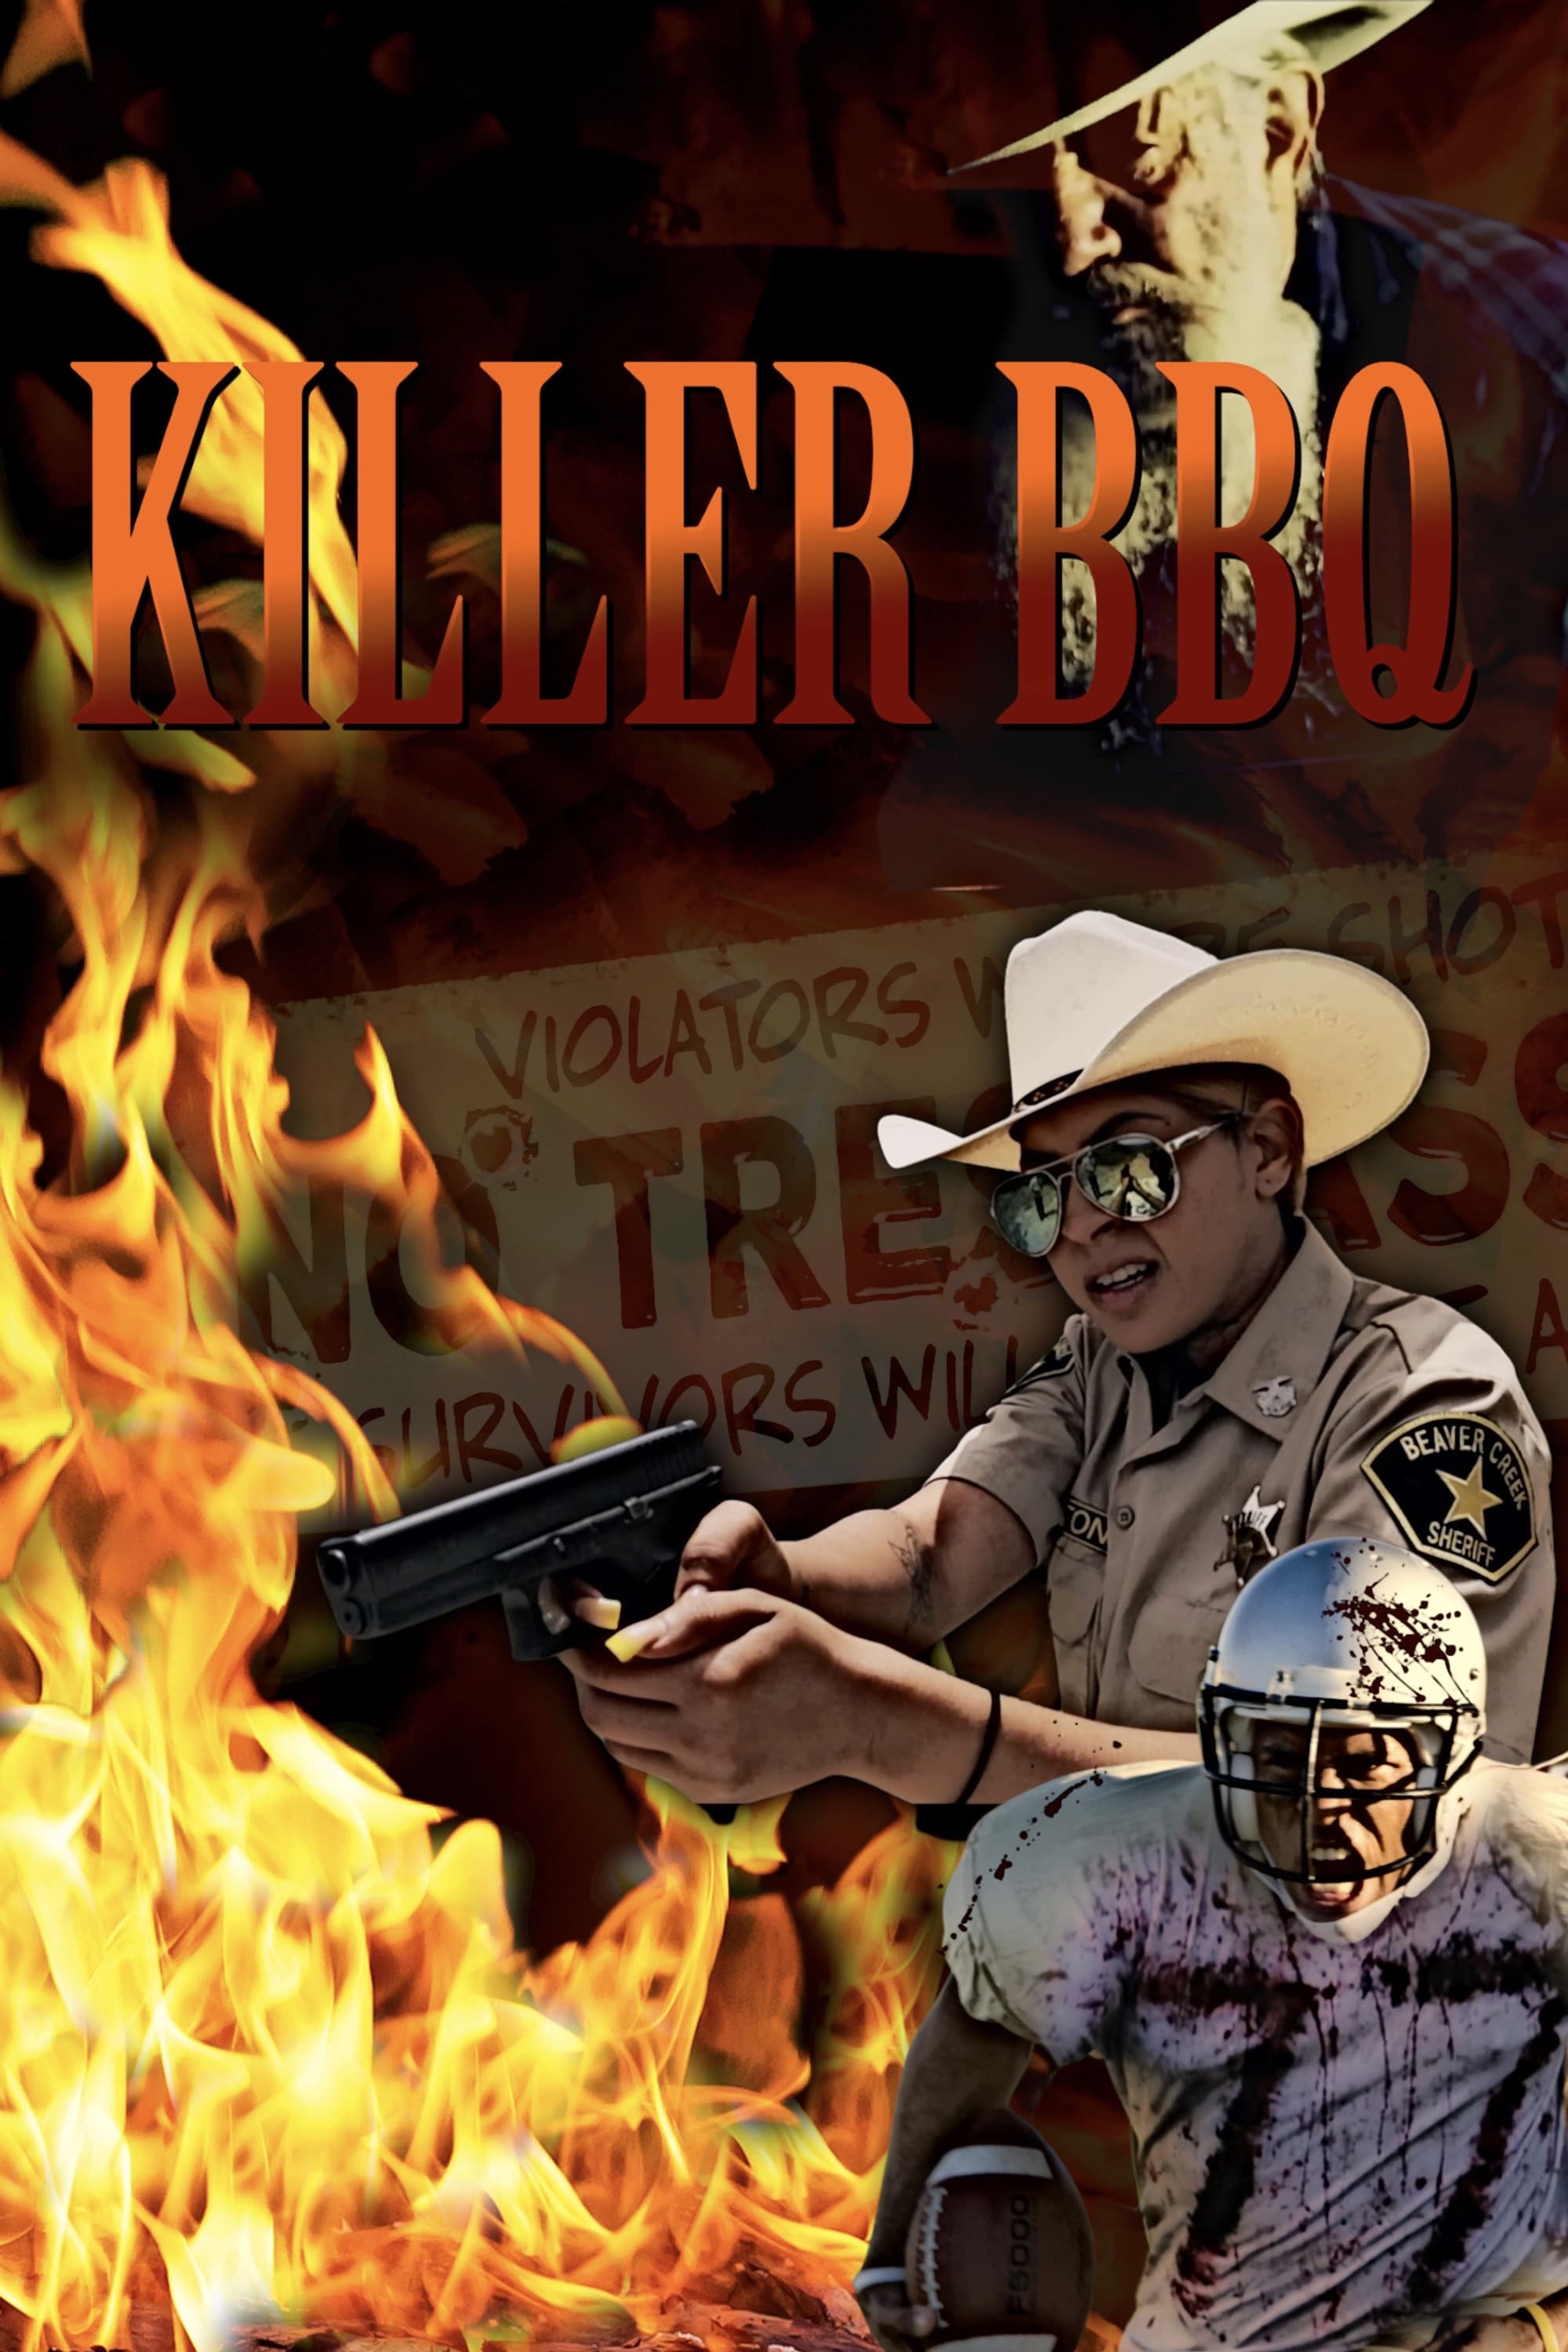 Killer BBQ